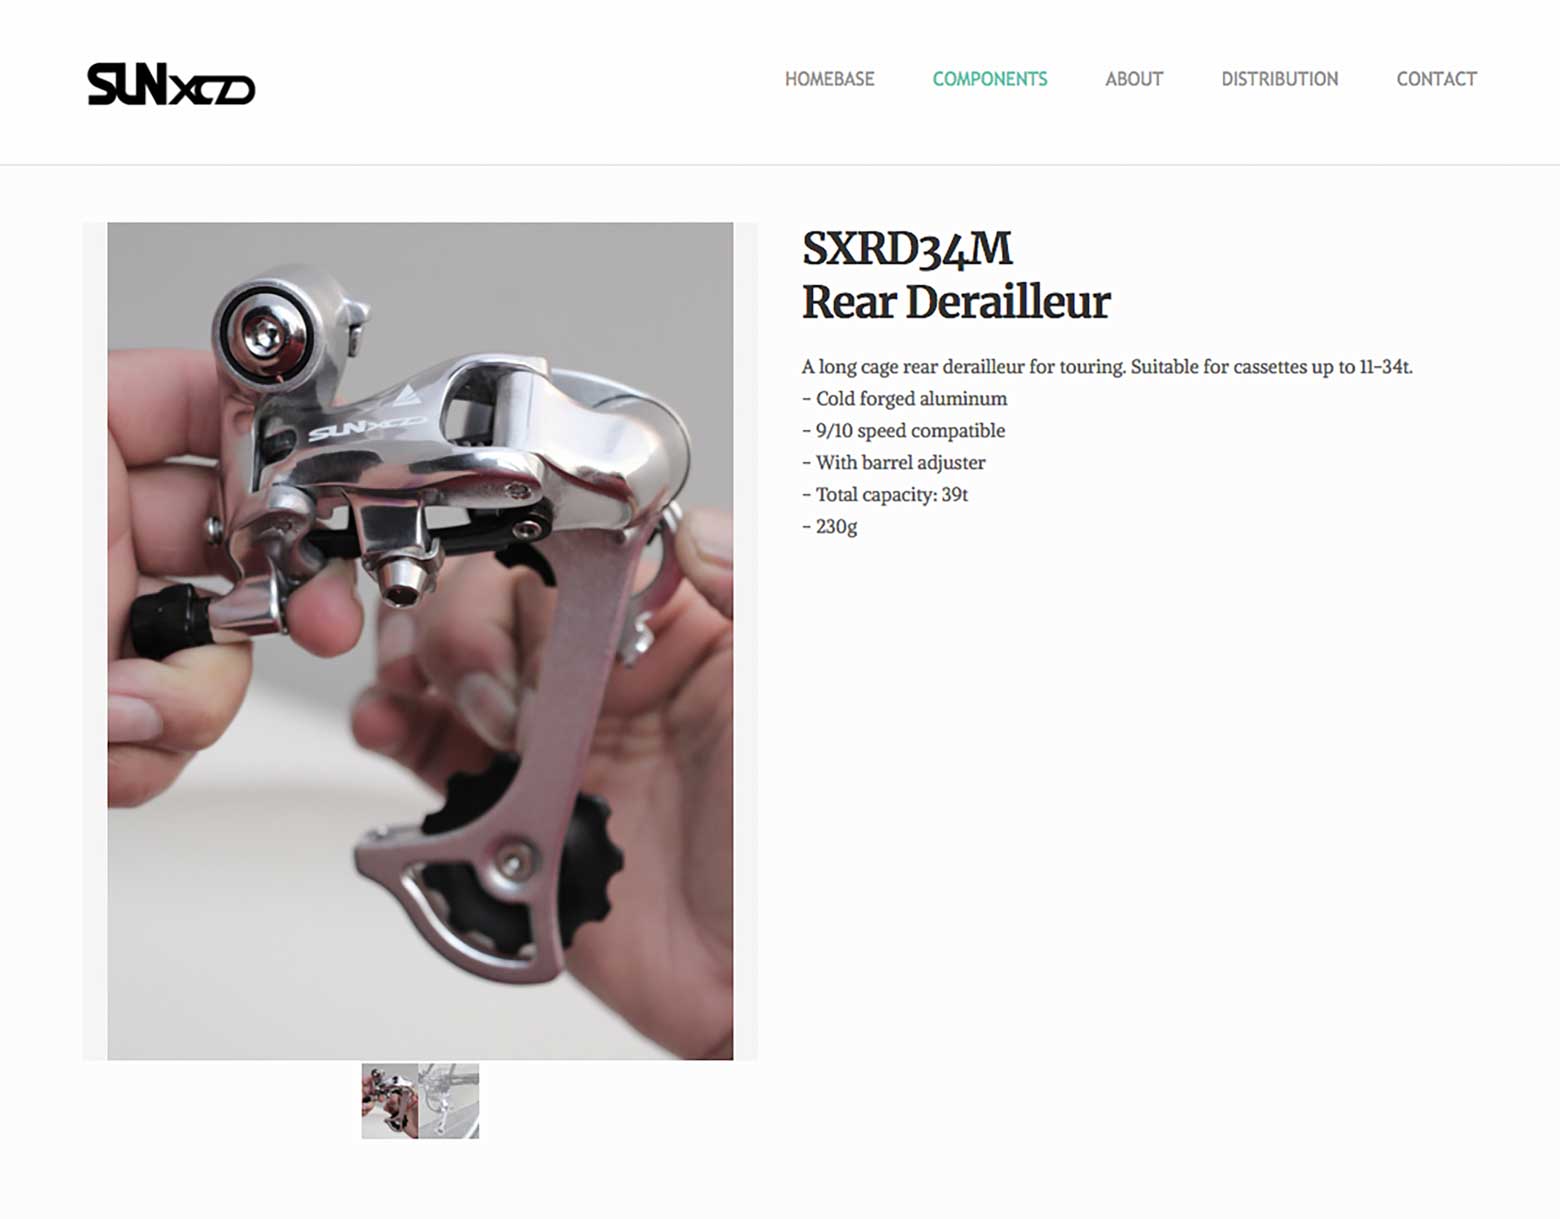 Sun XCD - web site 2014 image 2 main image